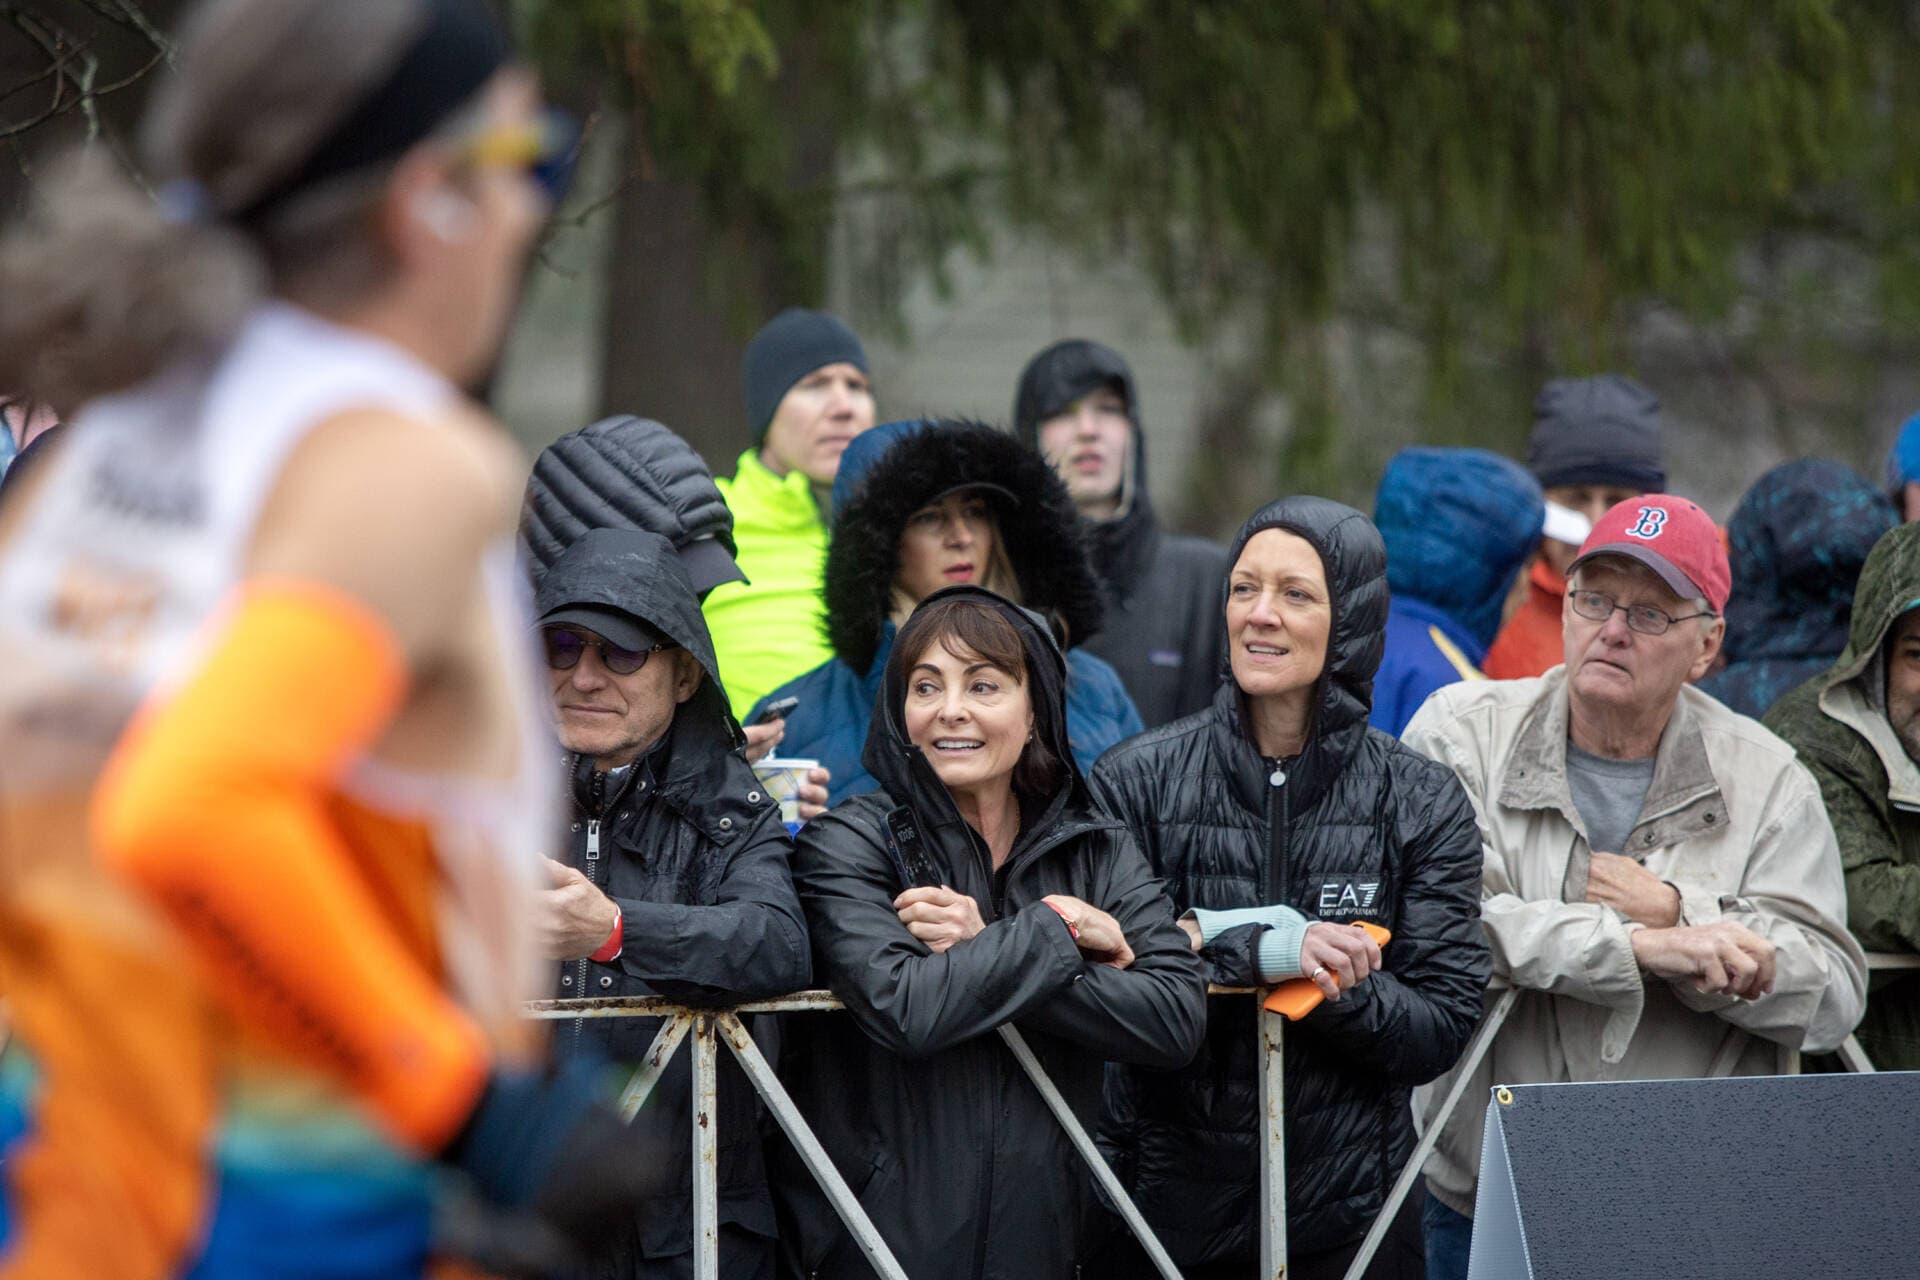 Spectators brave the rain to line the sidewalks in Hopkinton at the start of the 127th Boston Marathon. (Robin Lubbock/WBUR)